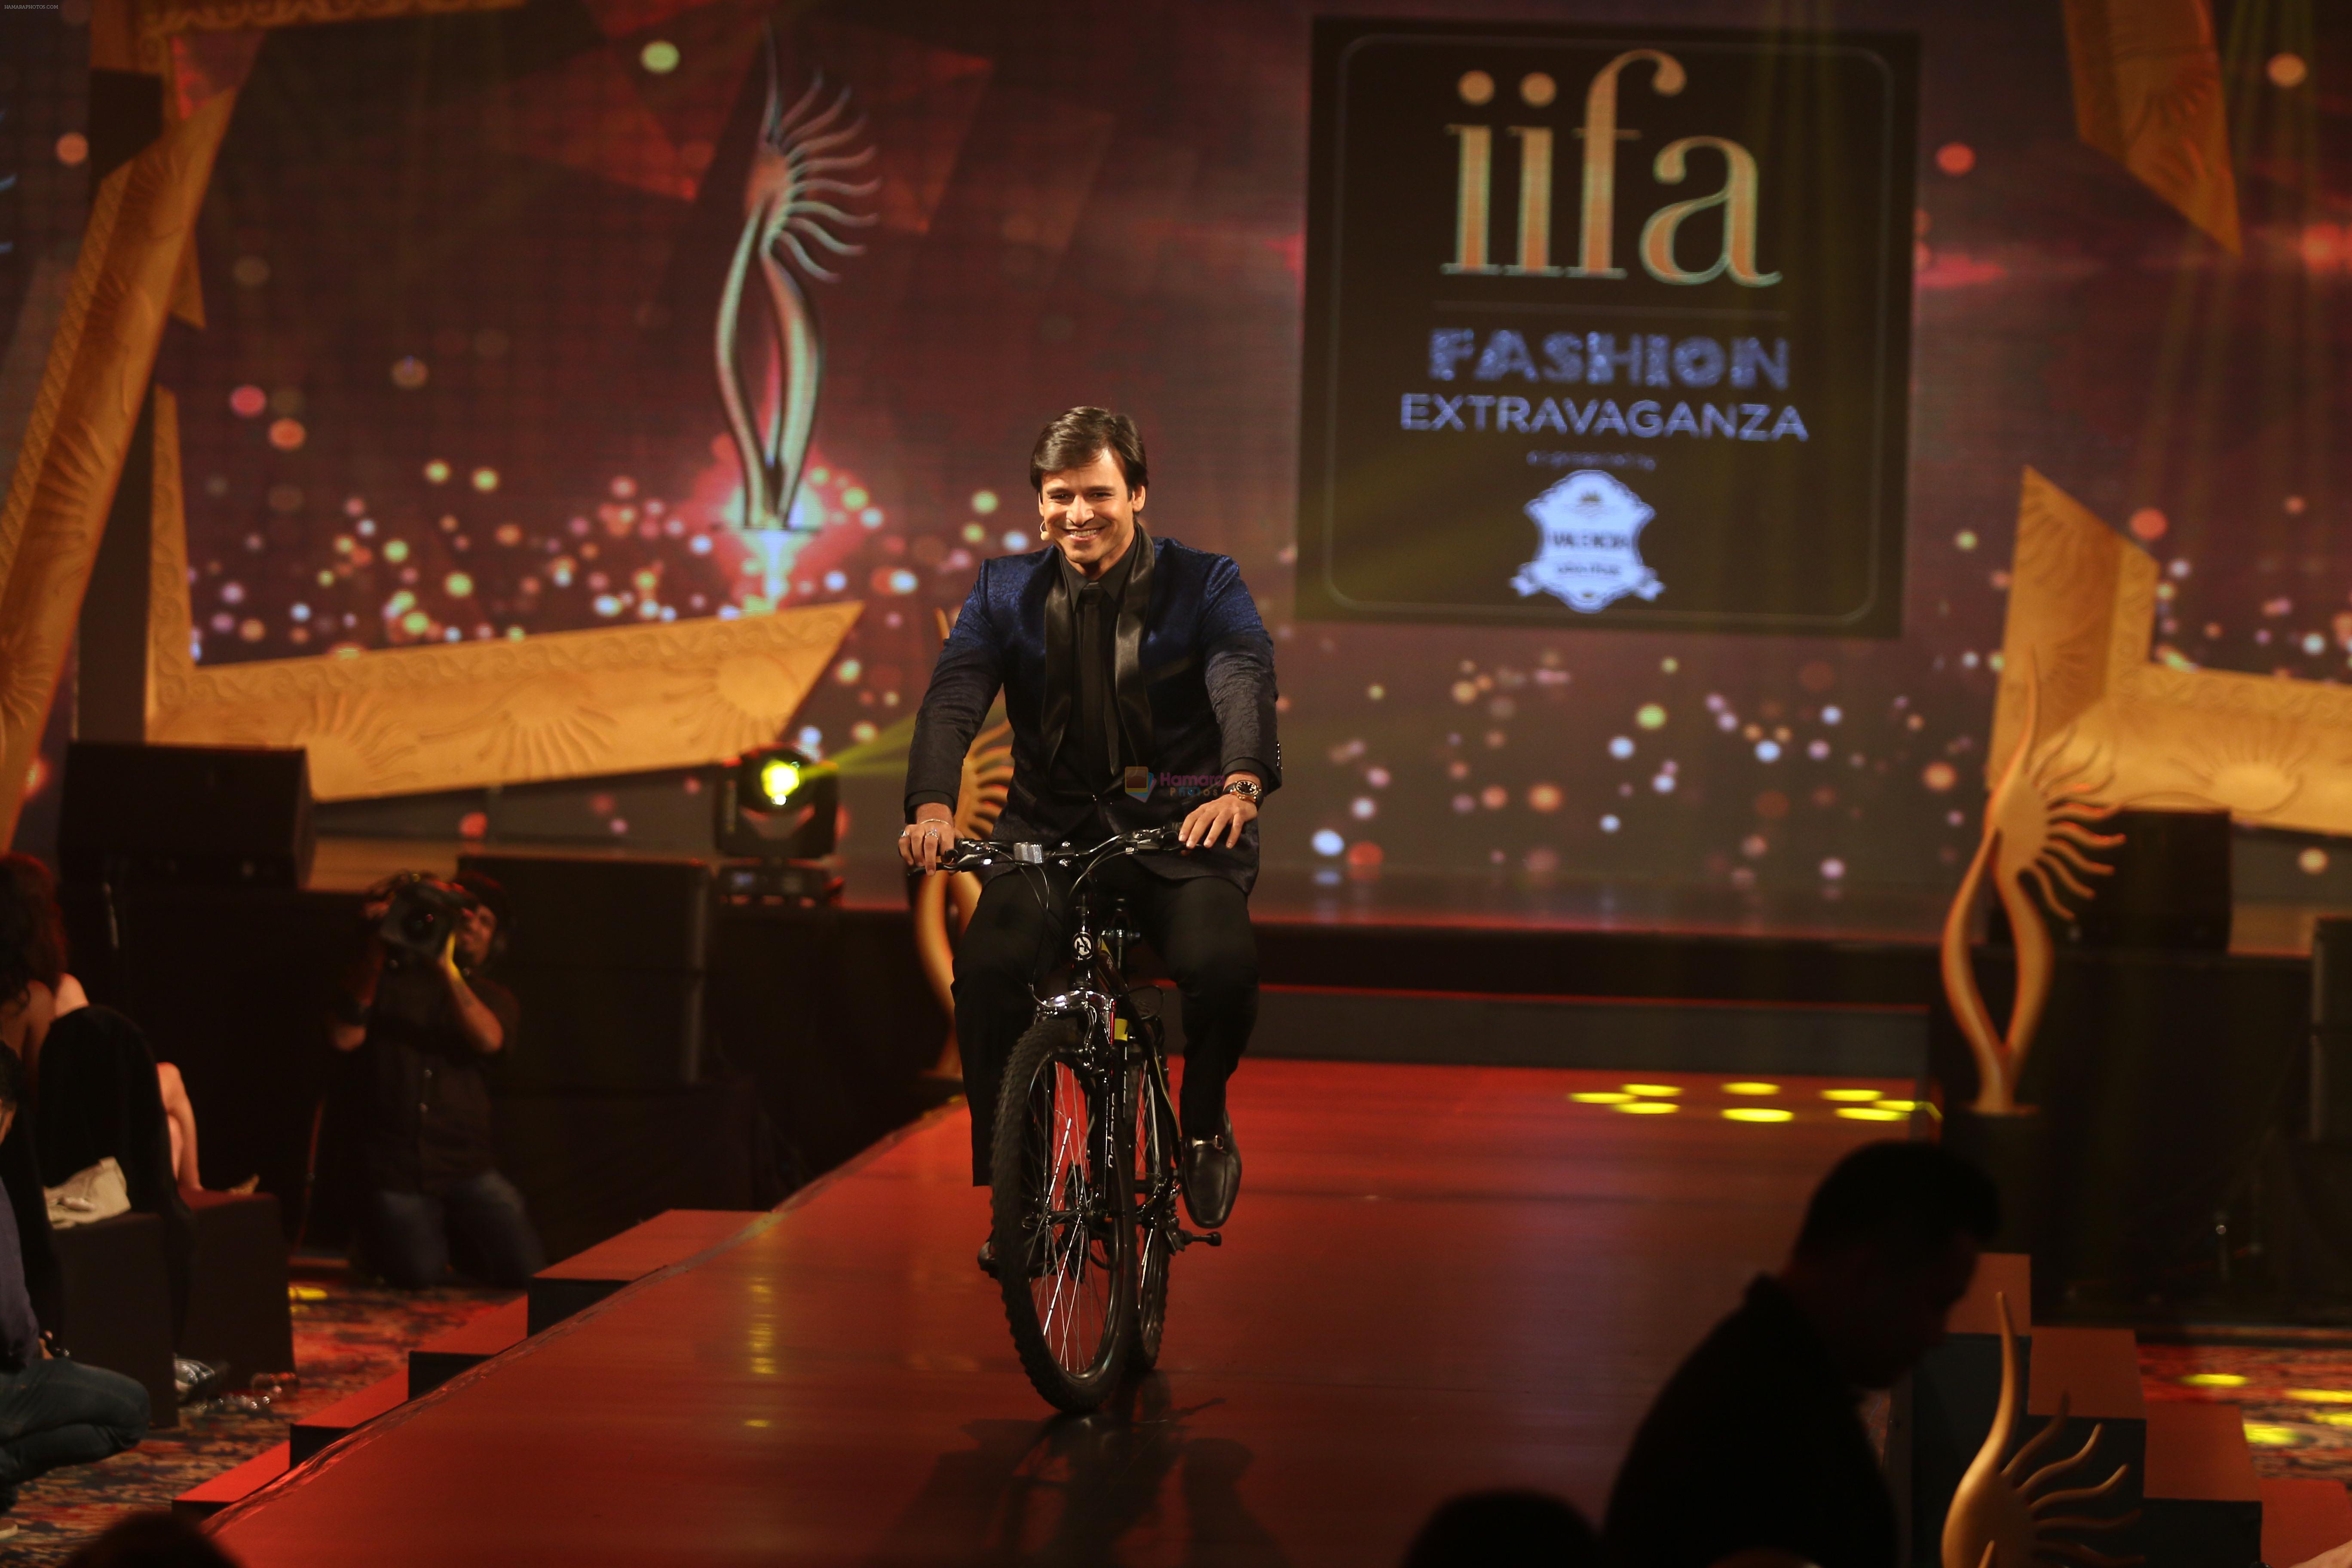 Vivek Oberoi at the IIFA Fashion Extravaganza